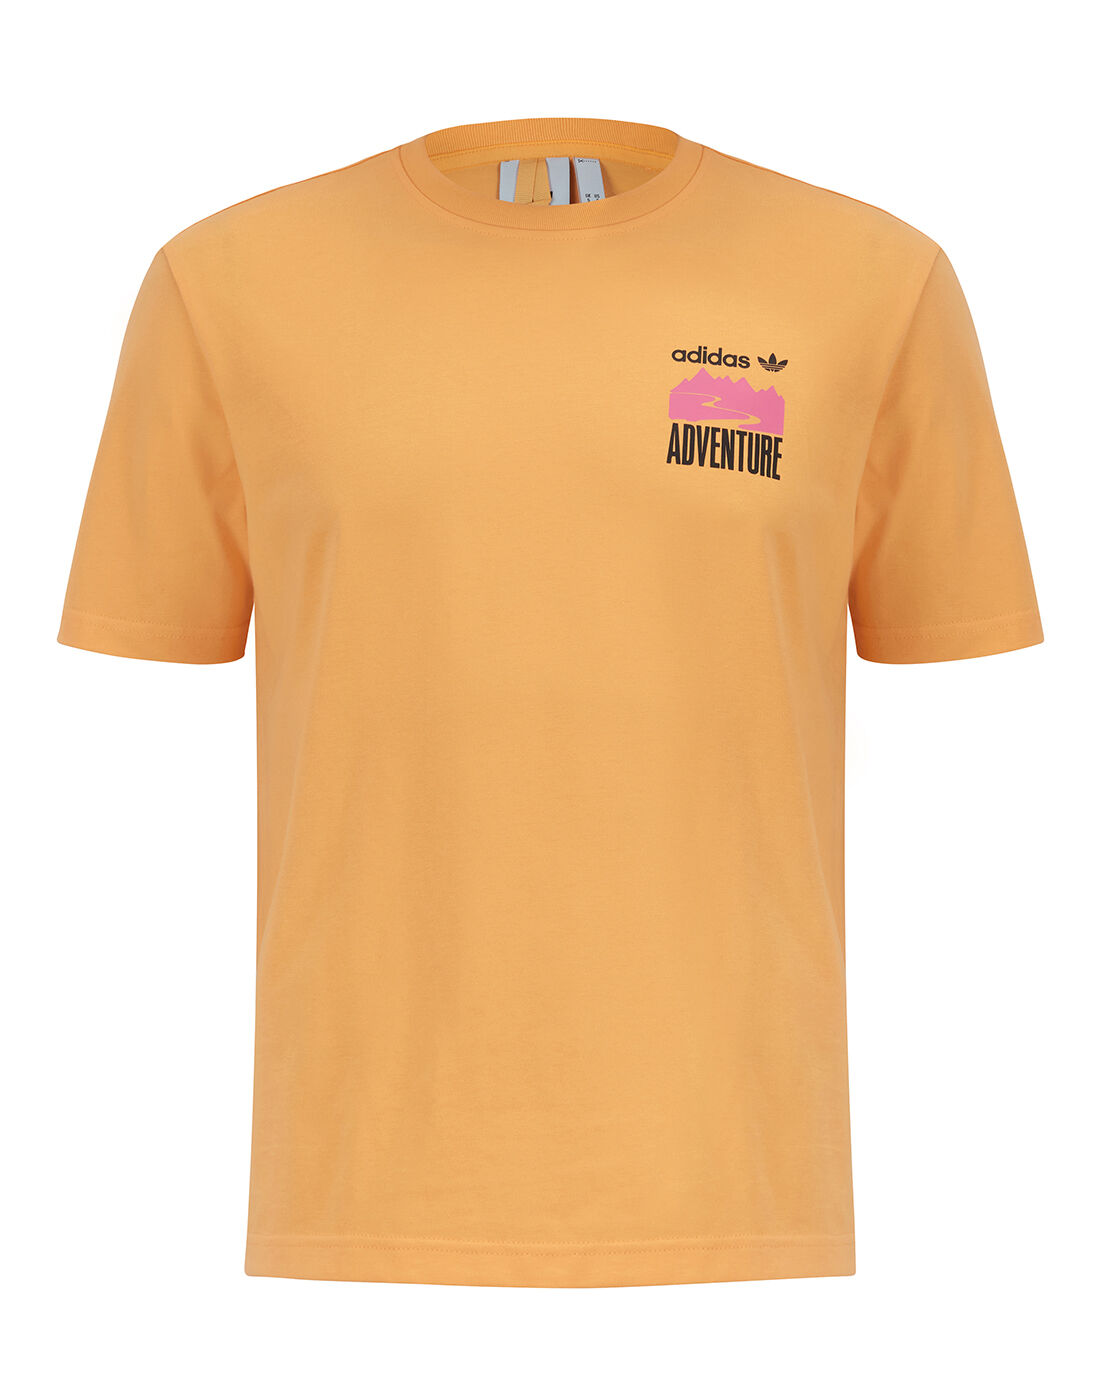 mens orange adidas t shirt